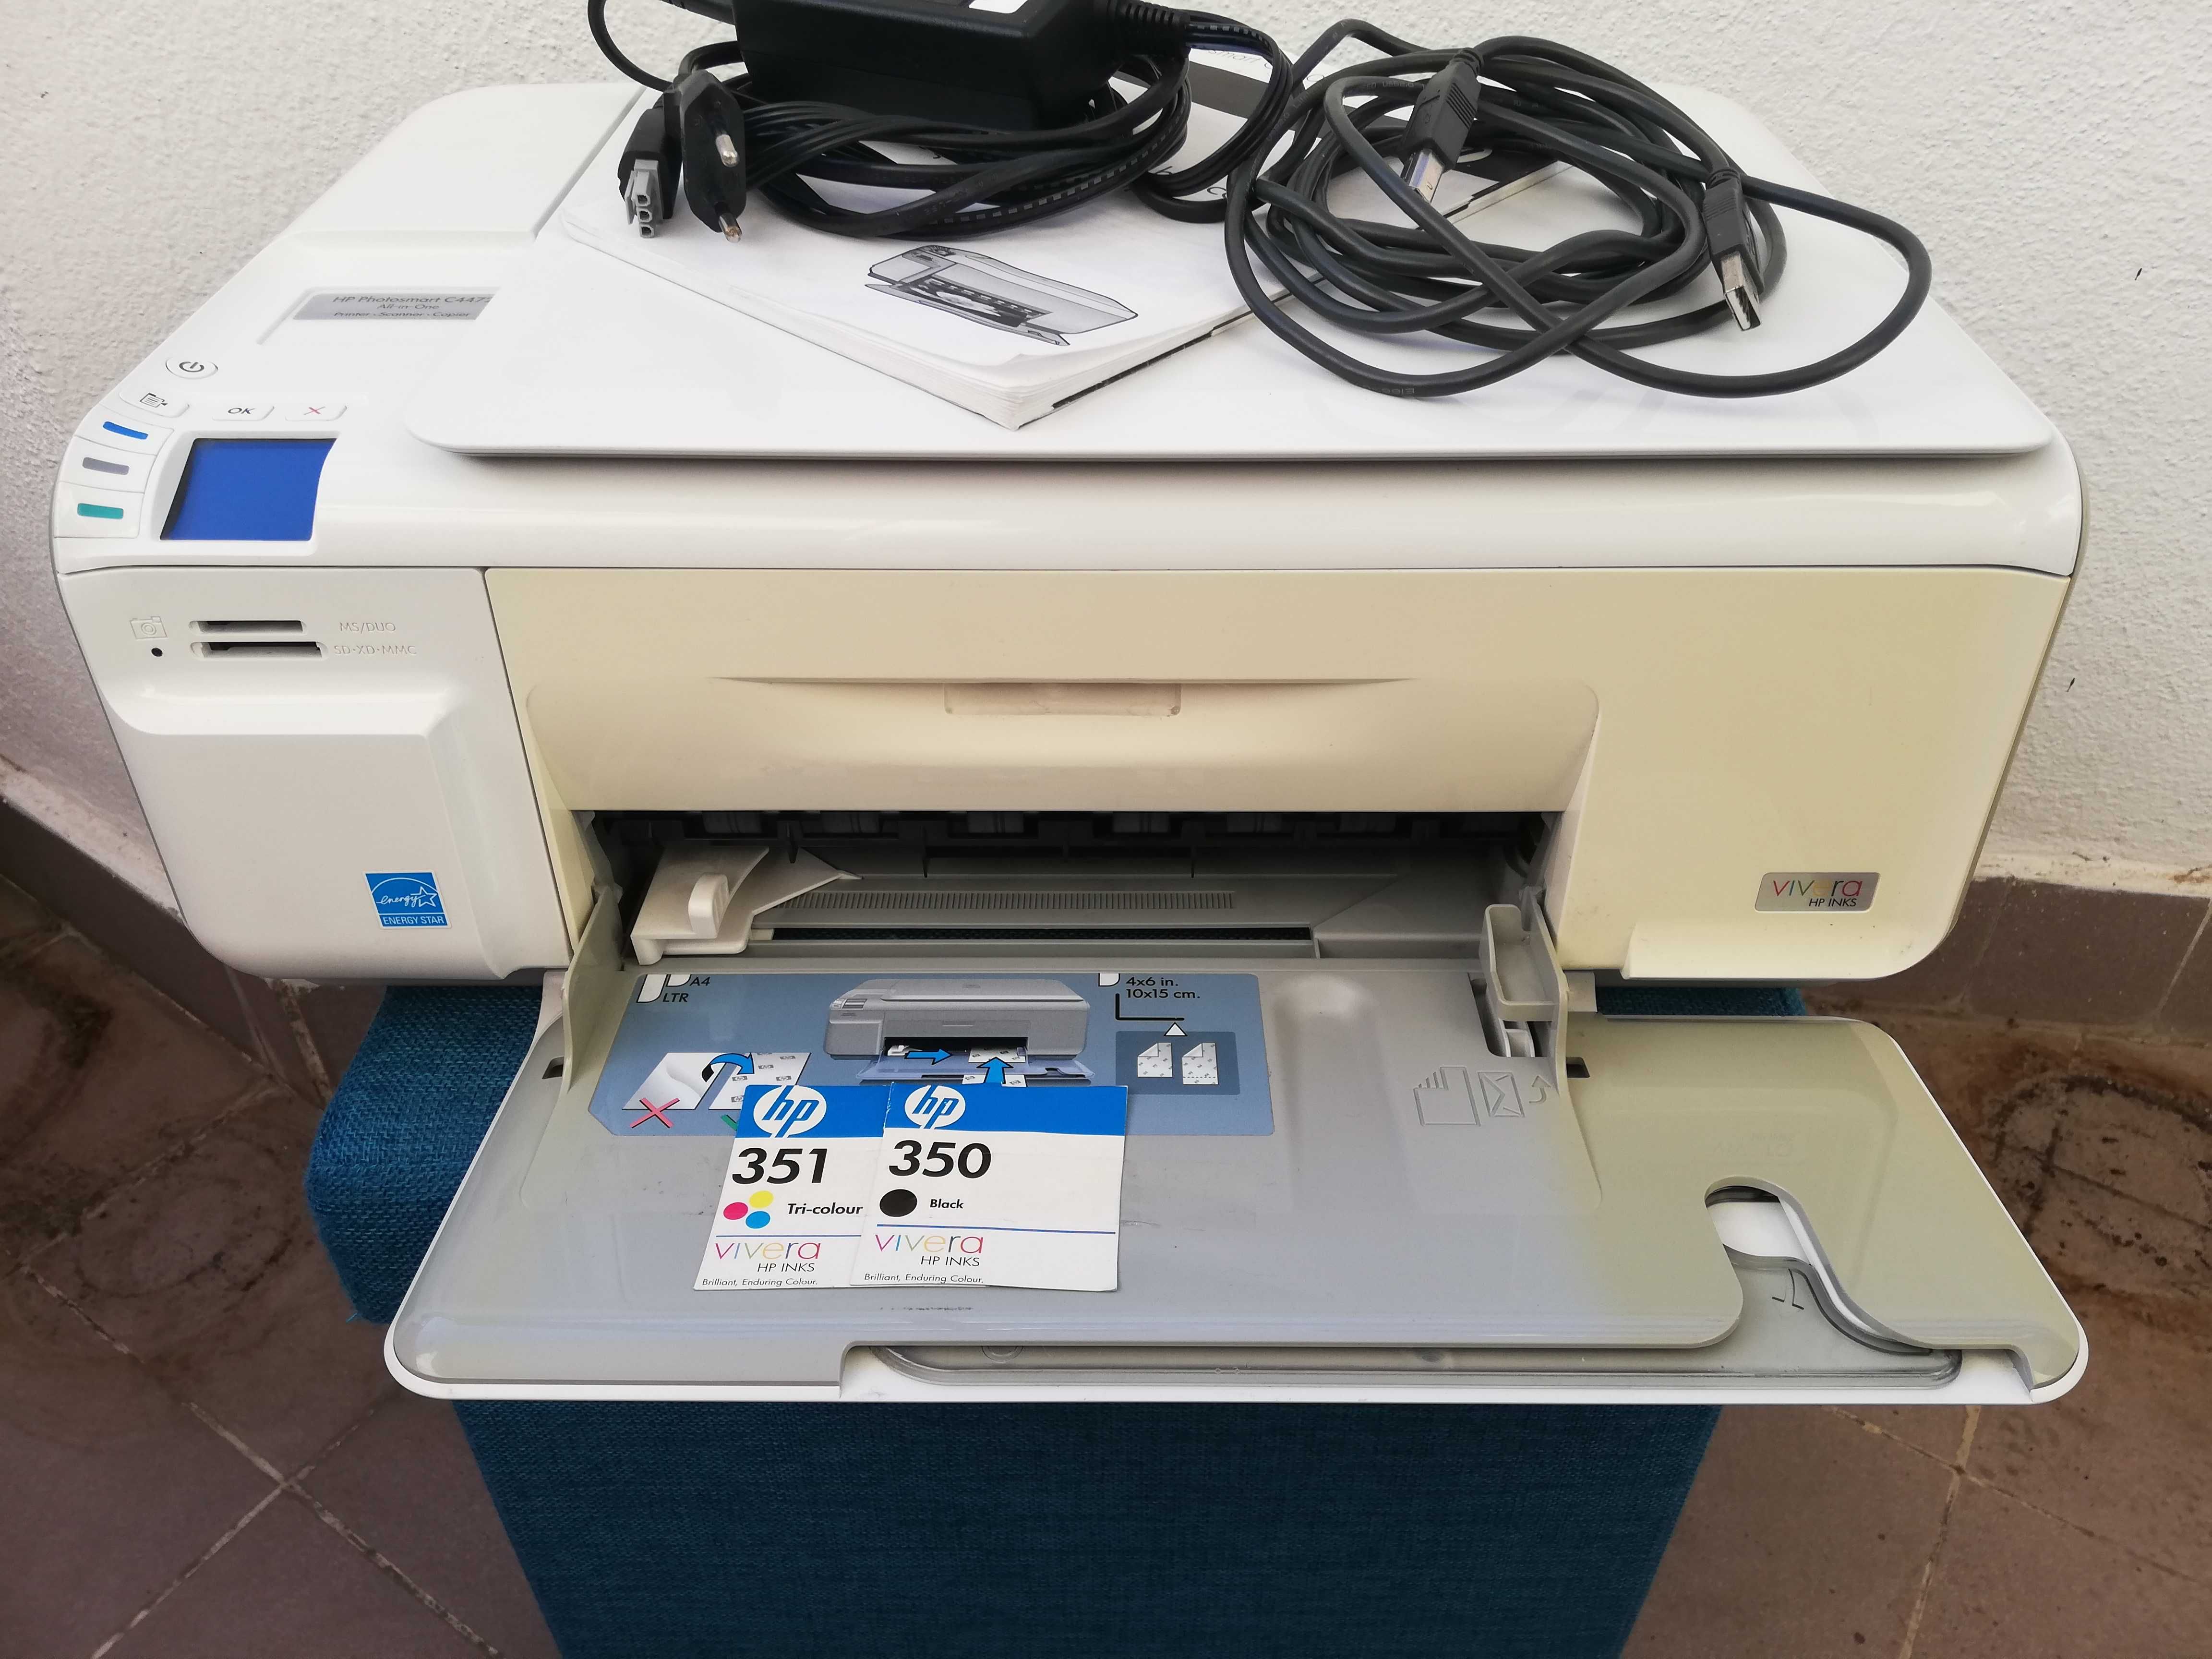 Impressora HP Photosmart C4472 All-in-one Printer-Scanner-Copier